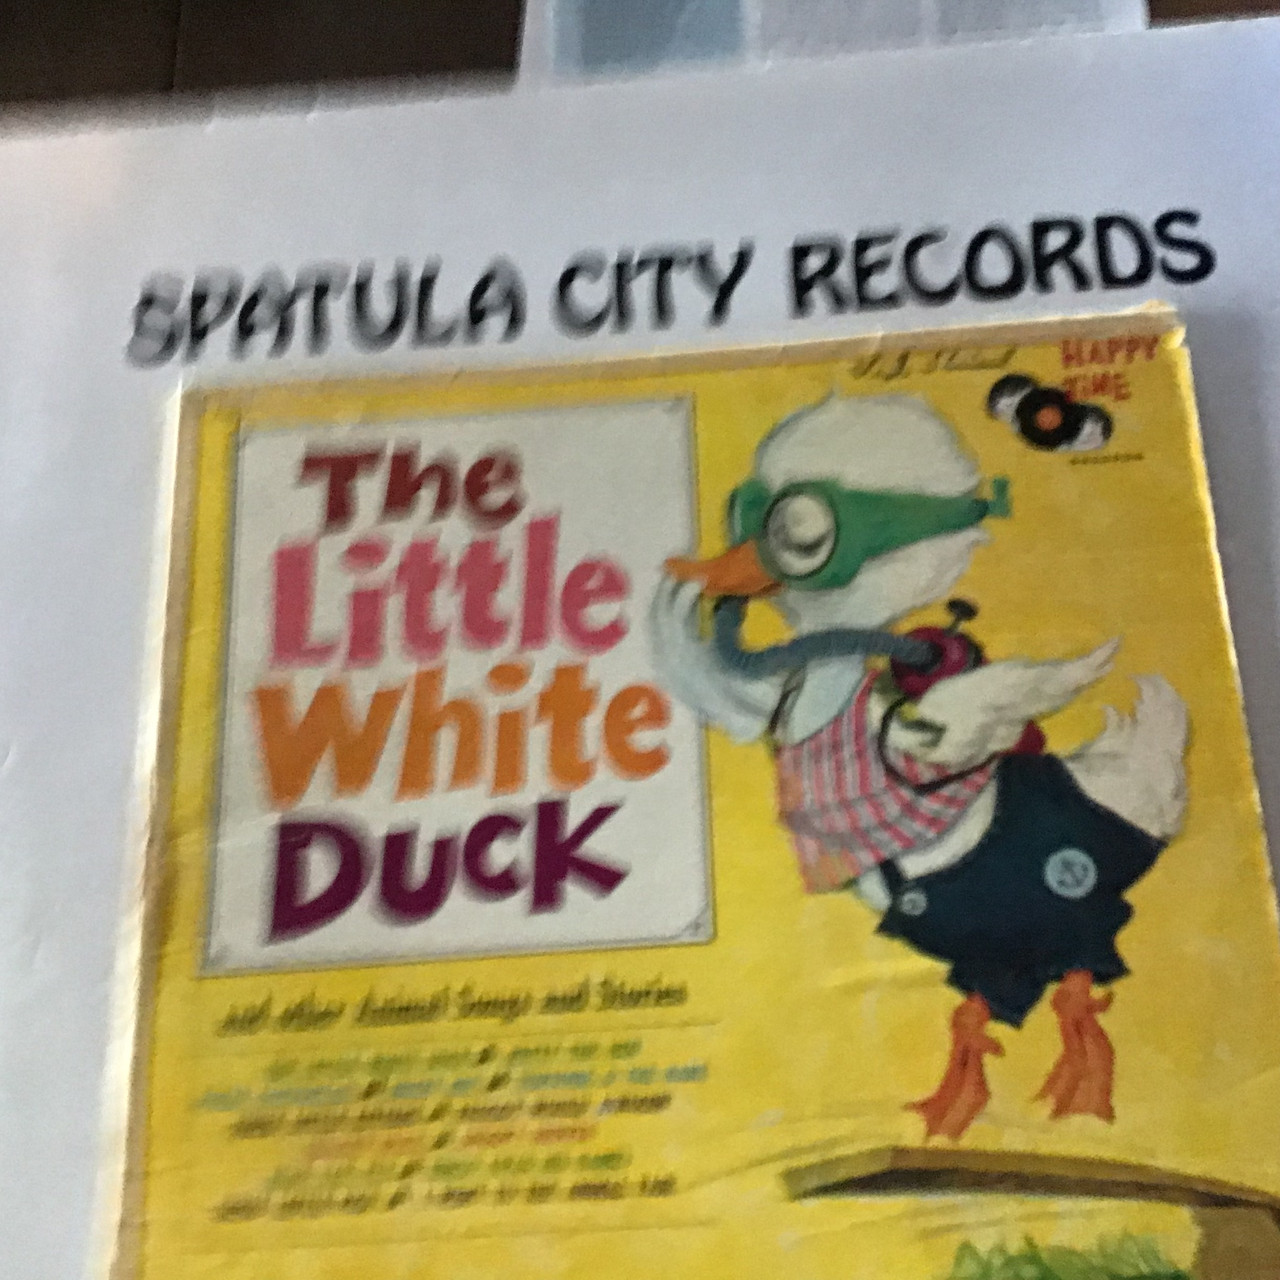 Little White Duck, The - soundtrack - MONO - vinyl record album LP